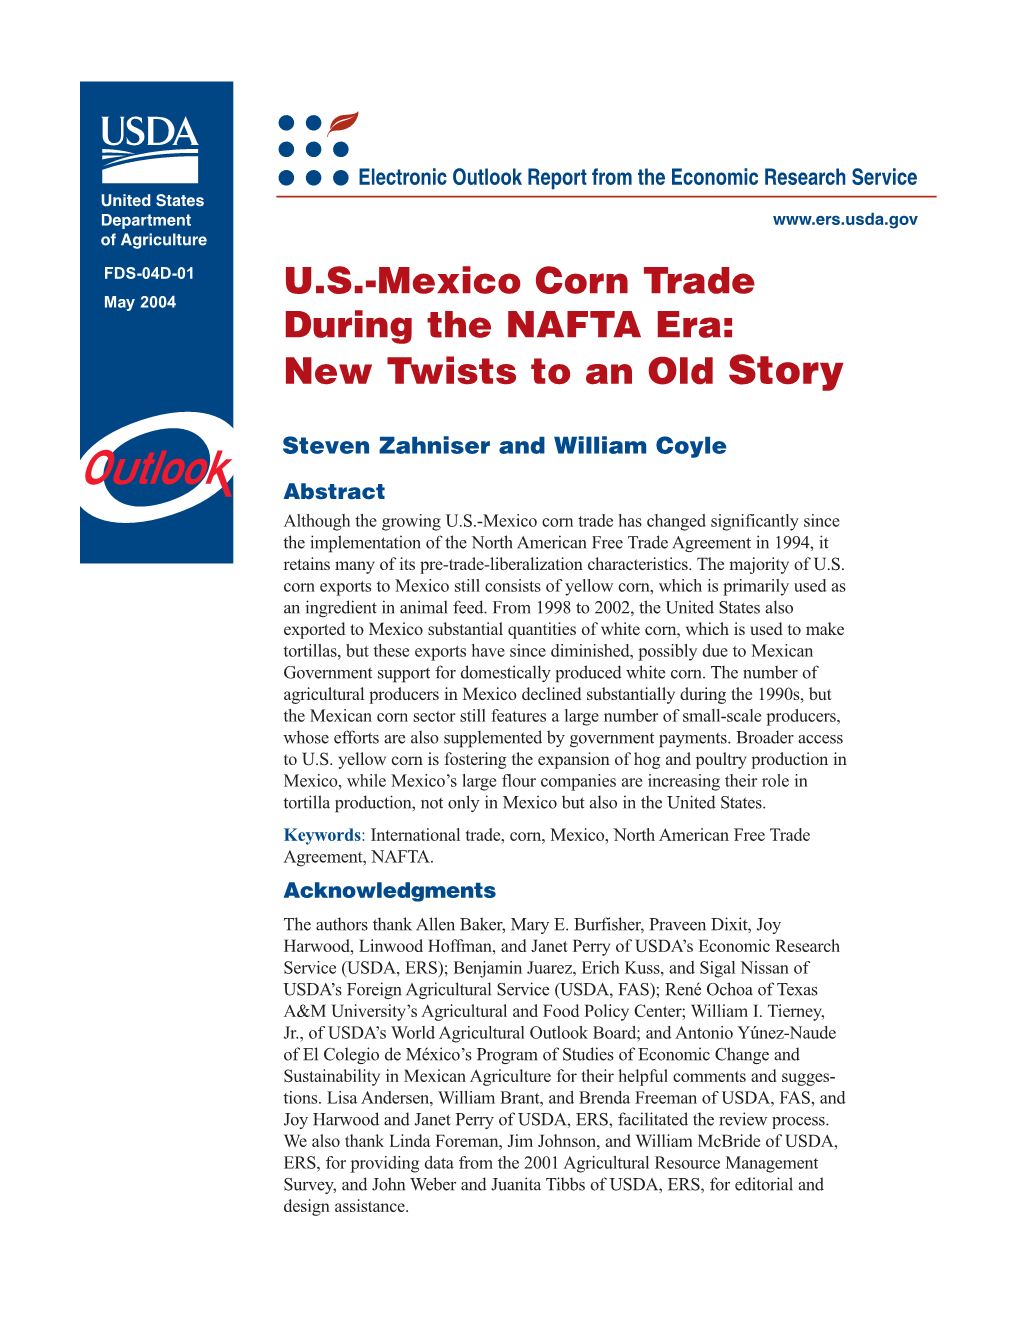 US-Mexico Corn Trade During the NAFTA